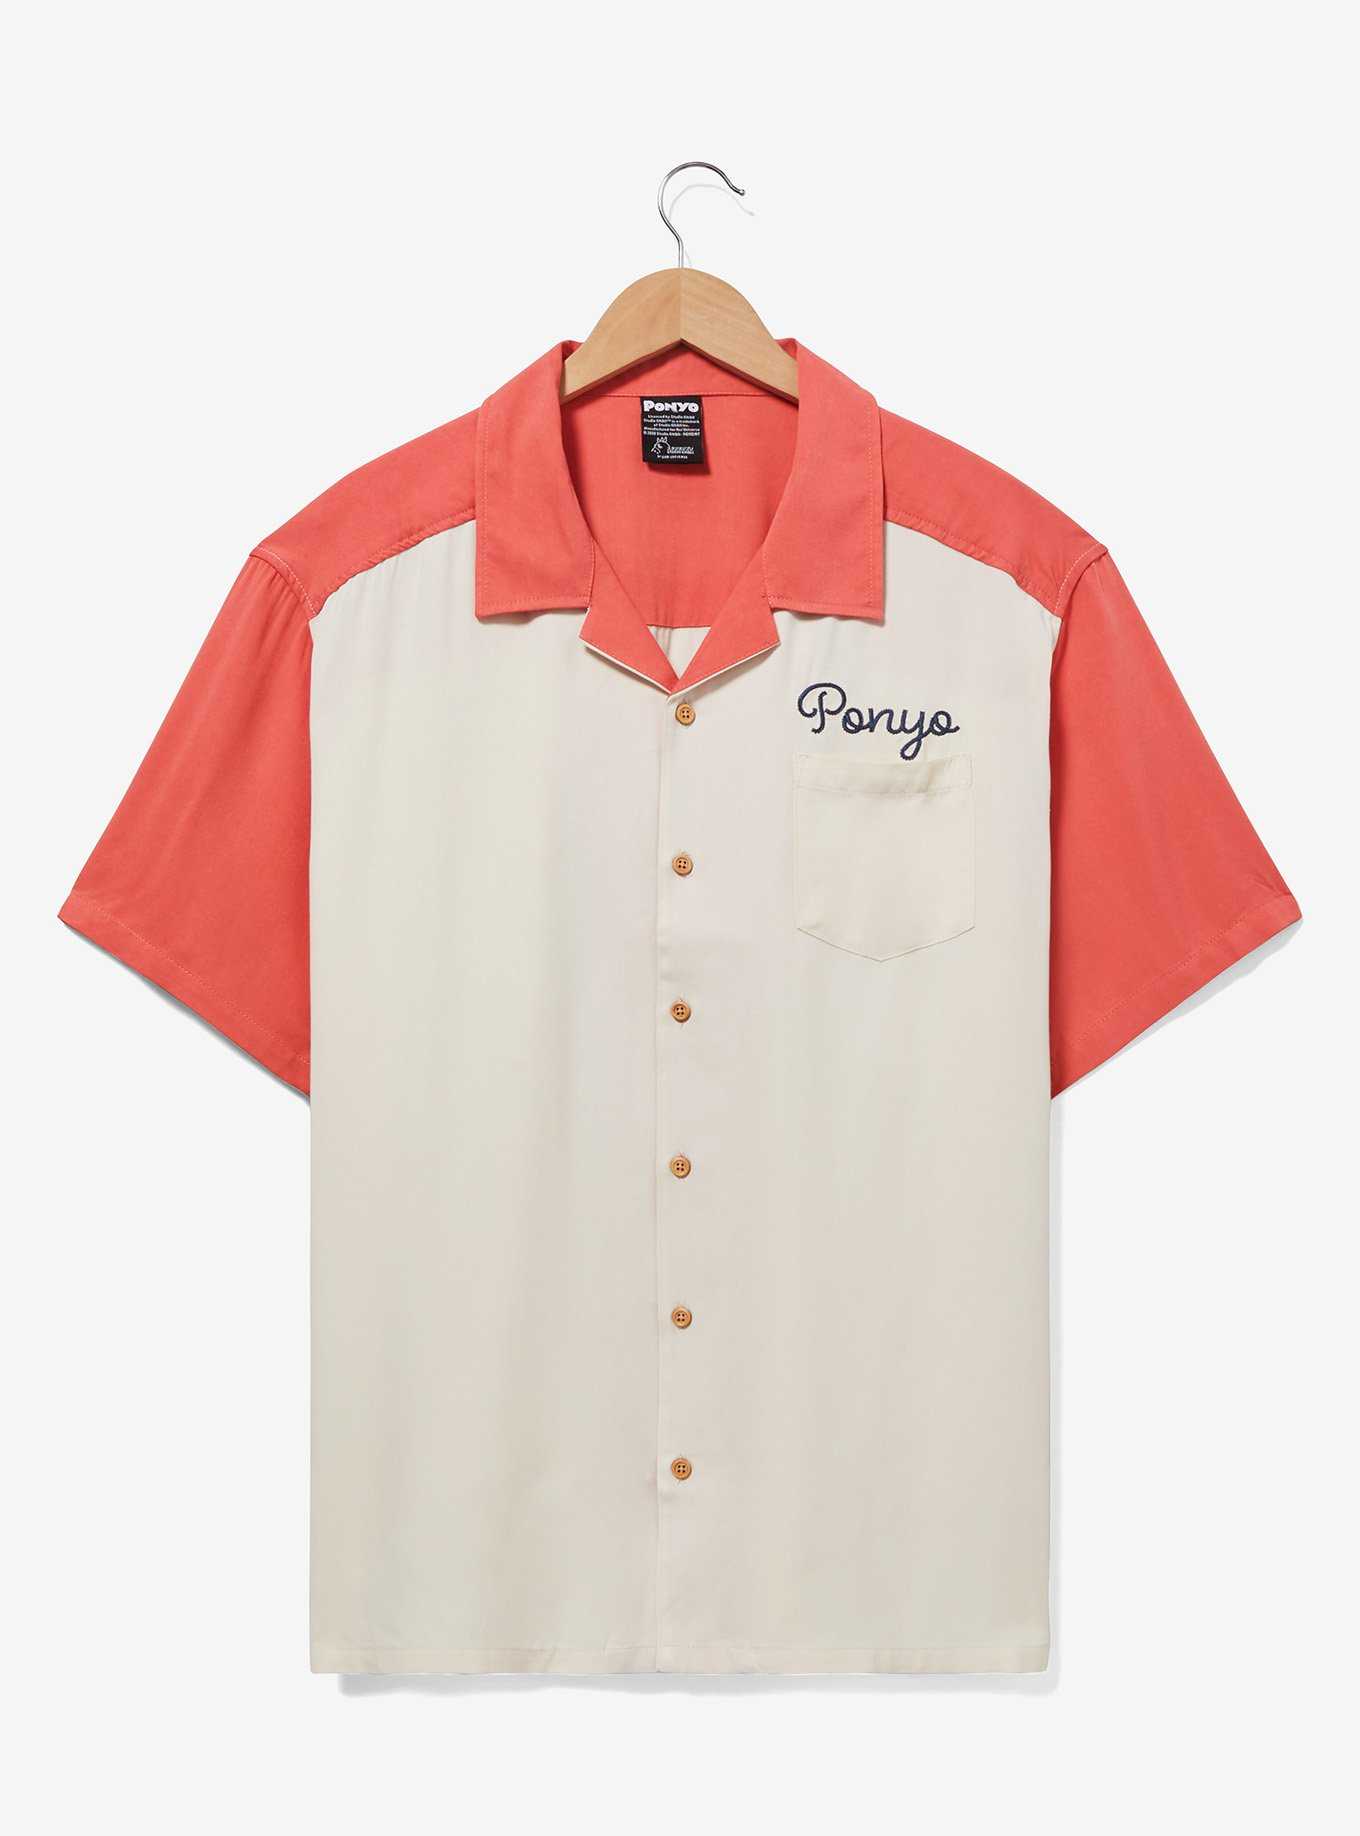 OFFICIAL Ponyo Shirts, Plush & Merchandise